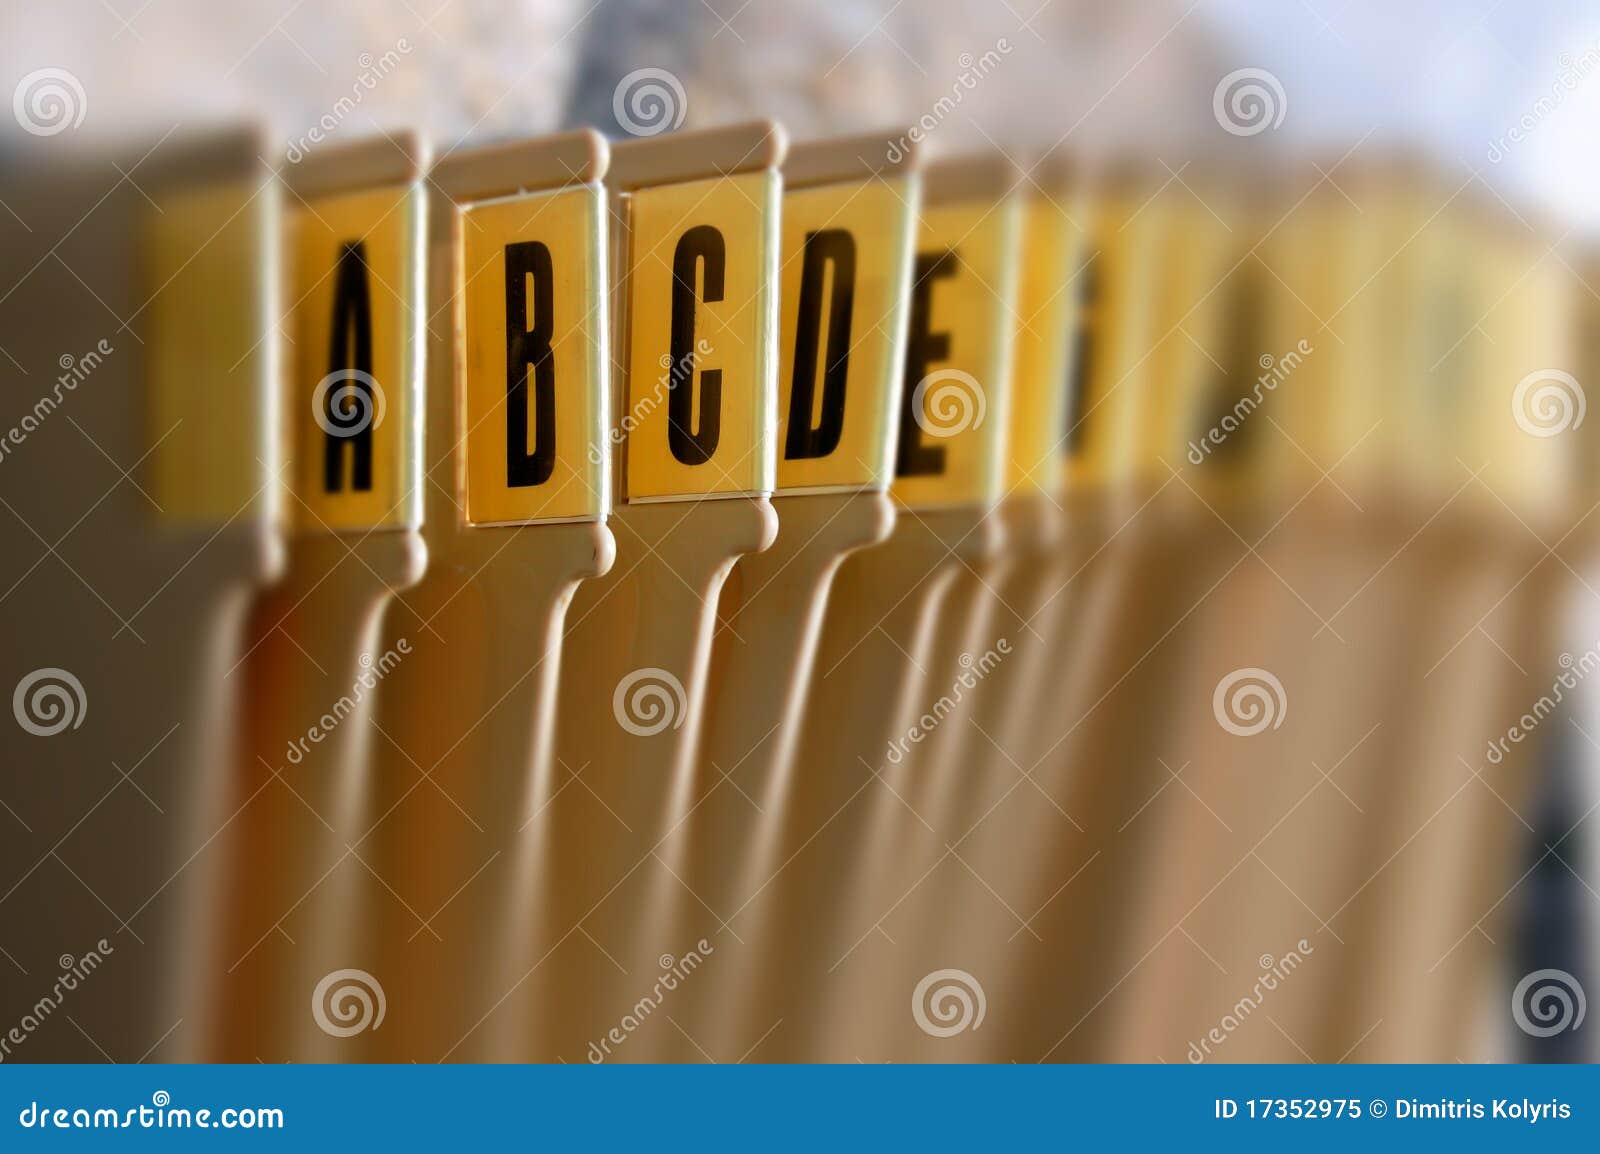 alphabetical filing tray